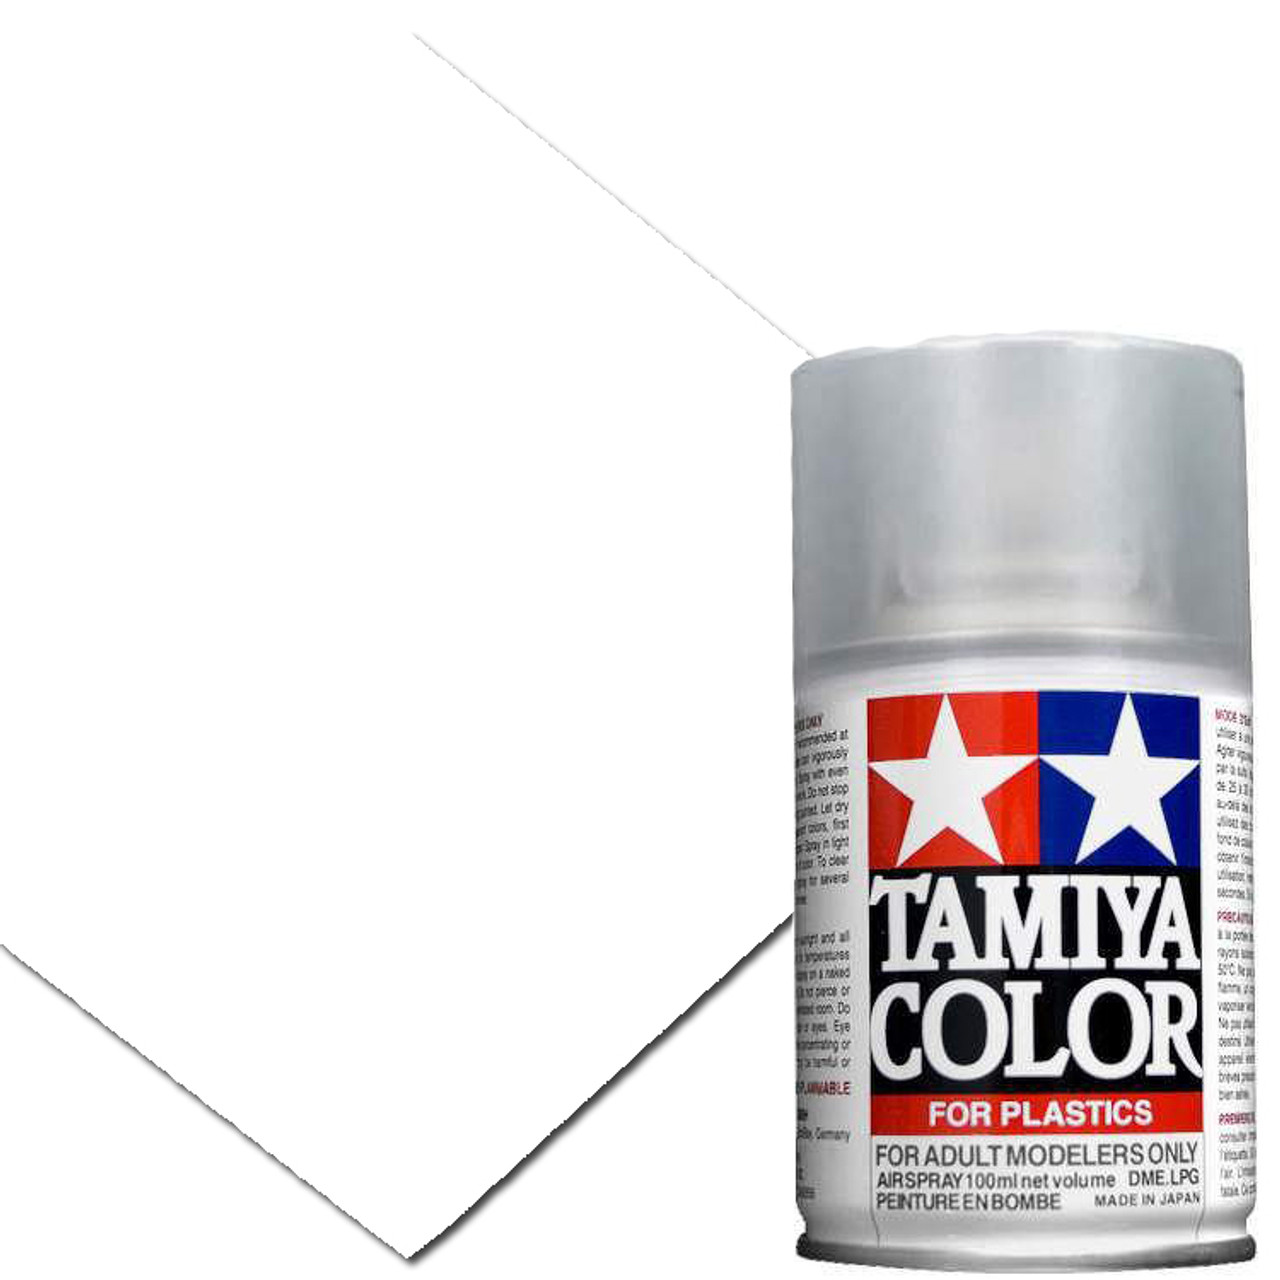 TS-79 Tamiya Lacquer Semi-Gloss Clear 100ml Spray Can